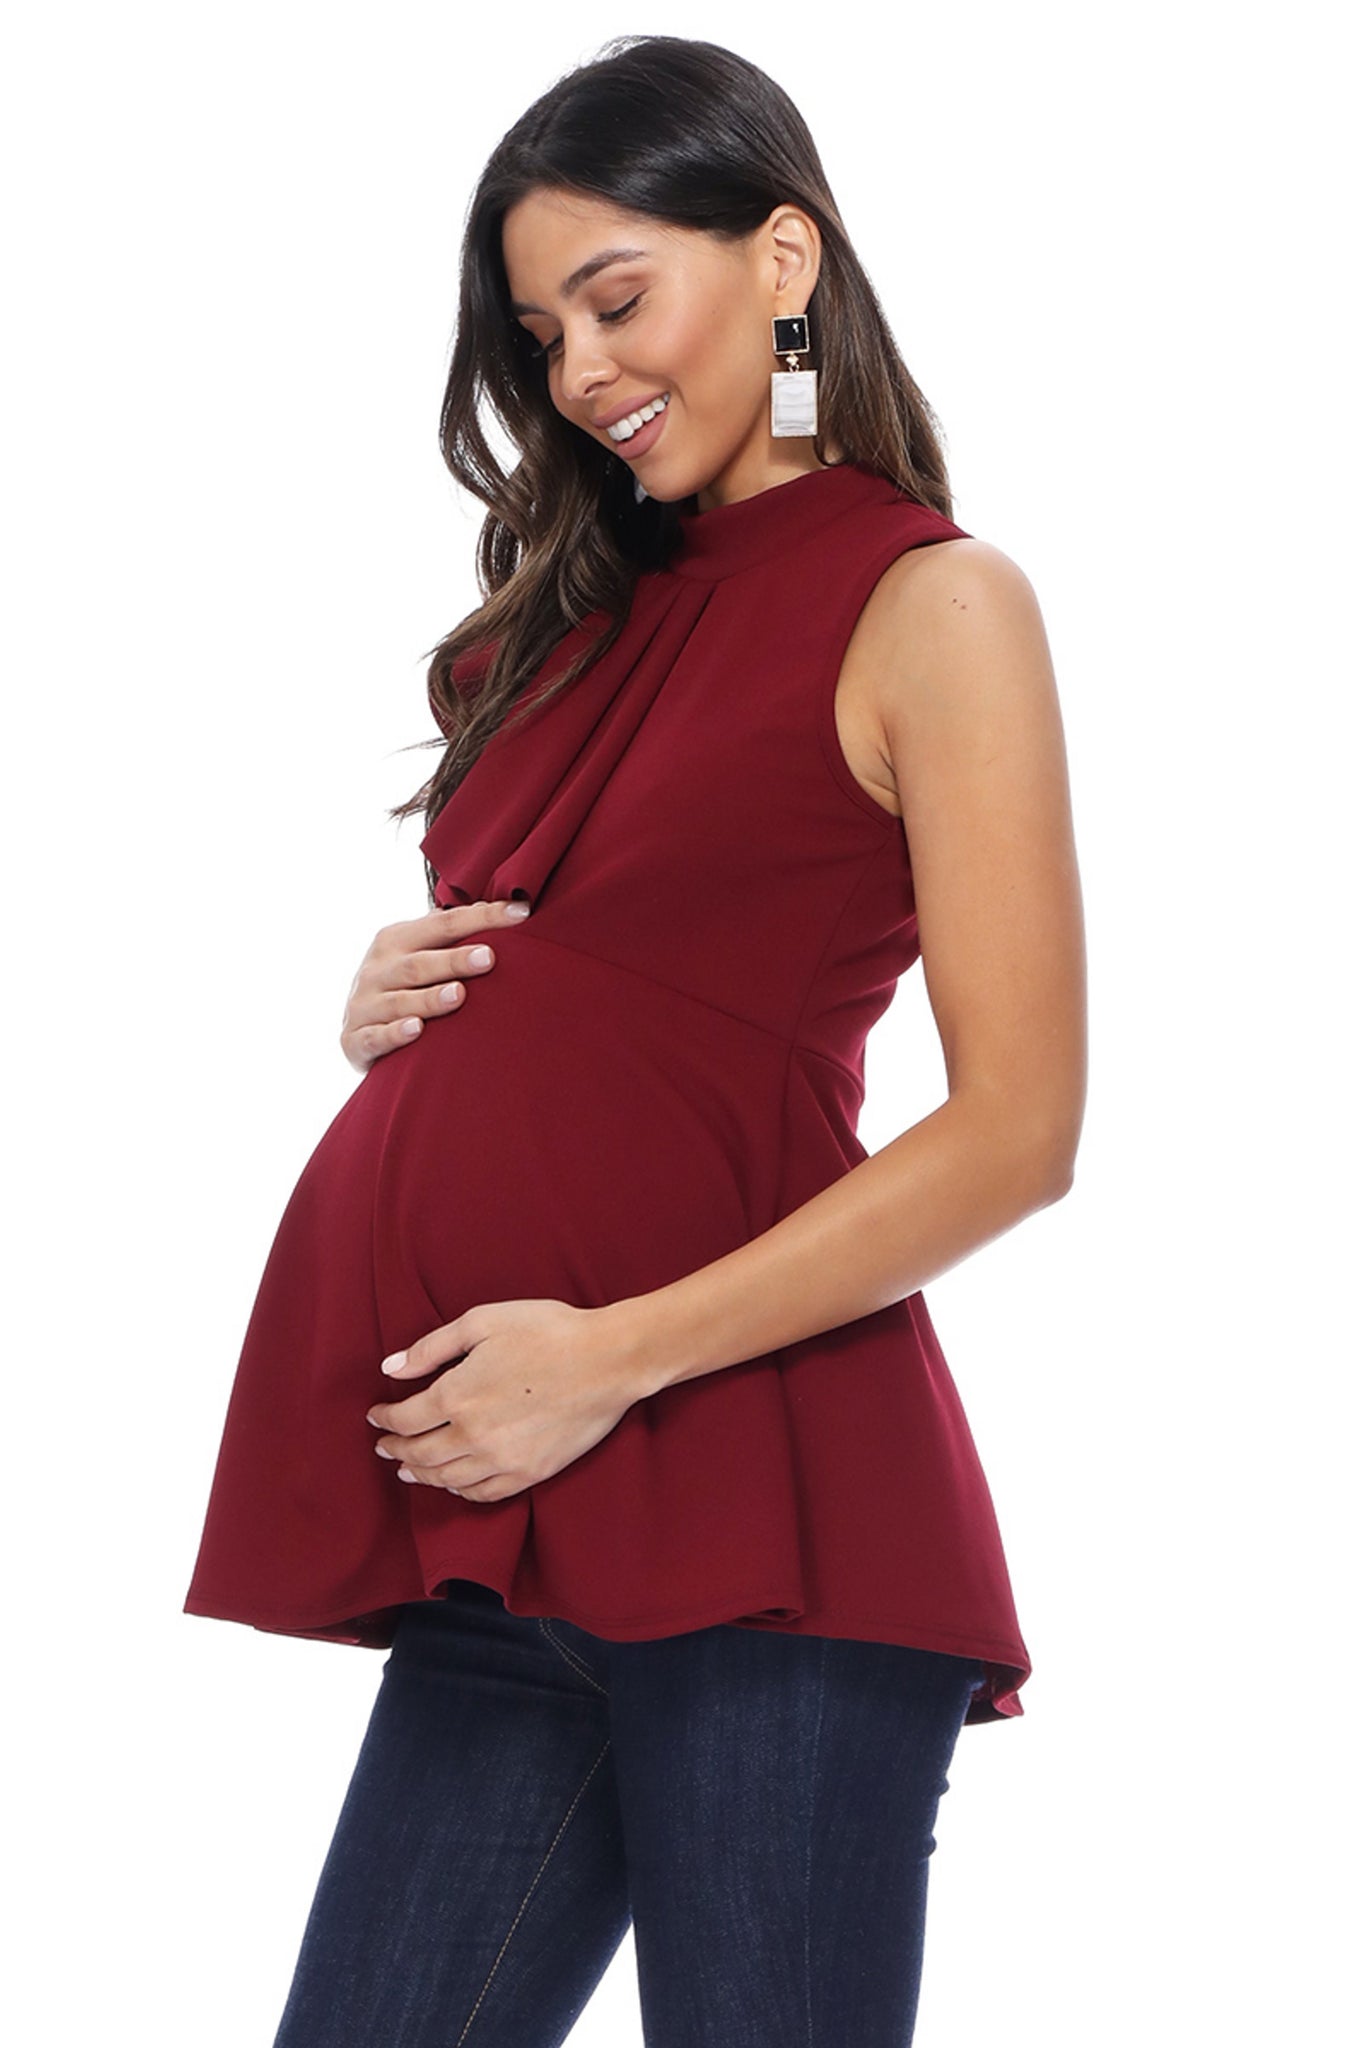 maternity pregnancy baby shower sleeveless peplum top shirt blouse